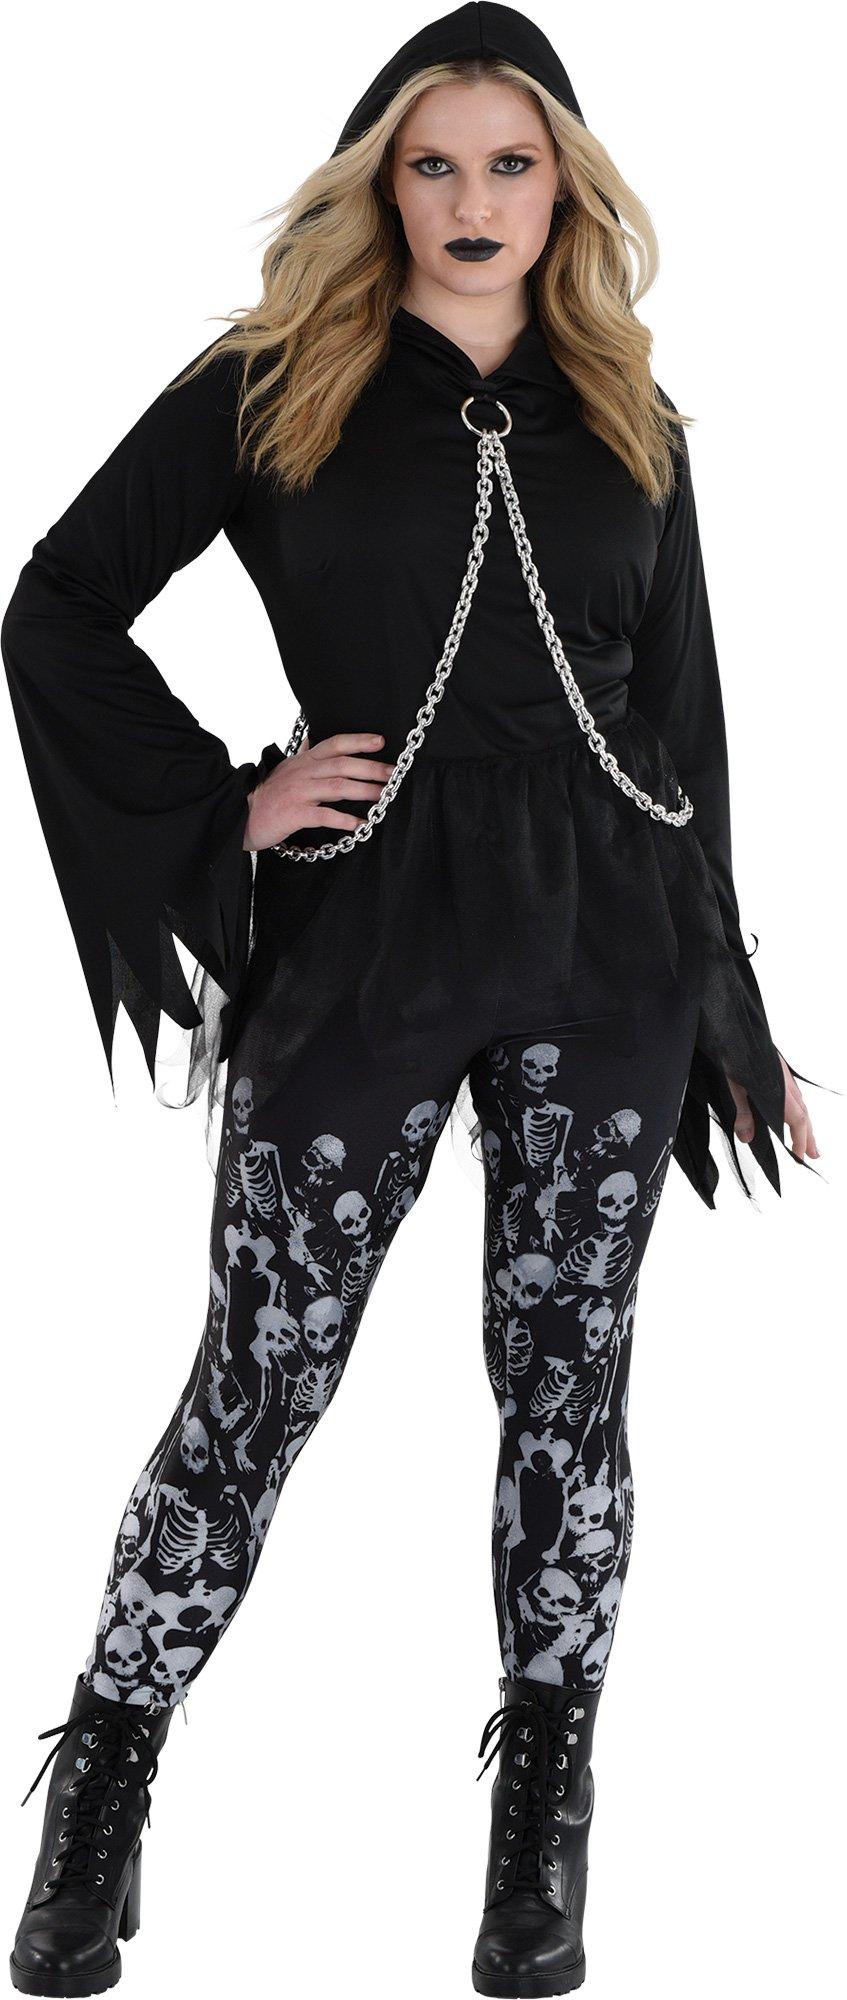 Adult Goth Reaper Plus Size Costume